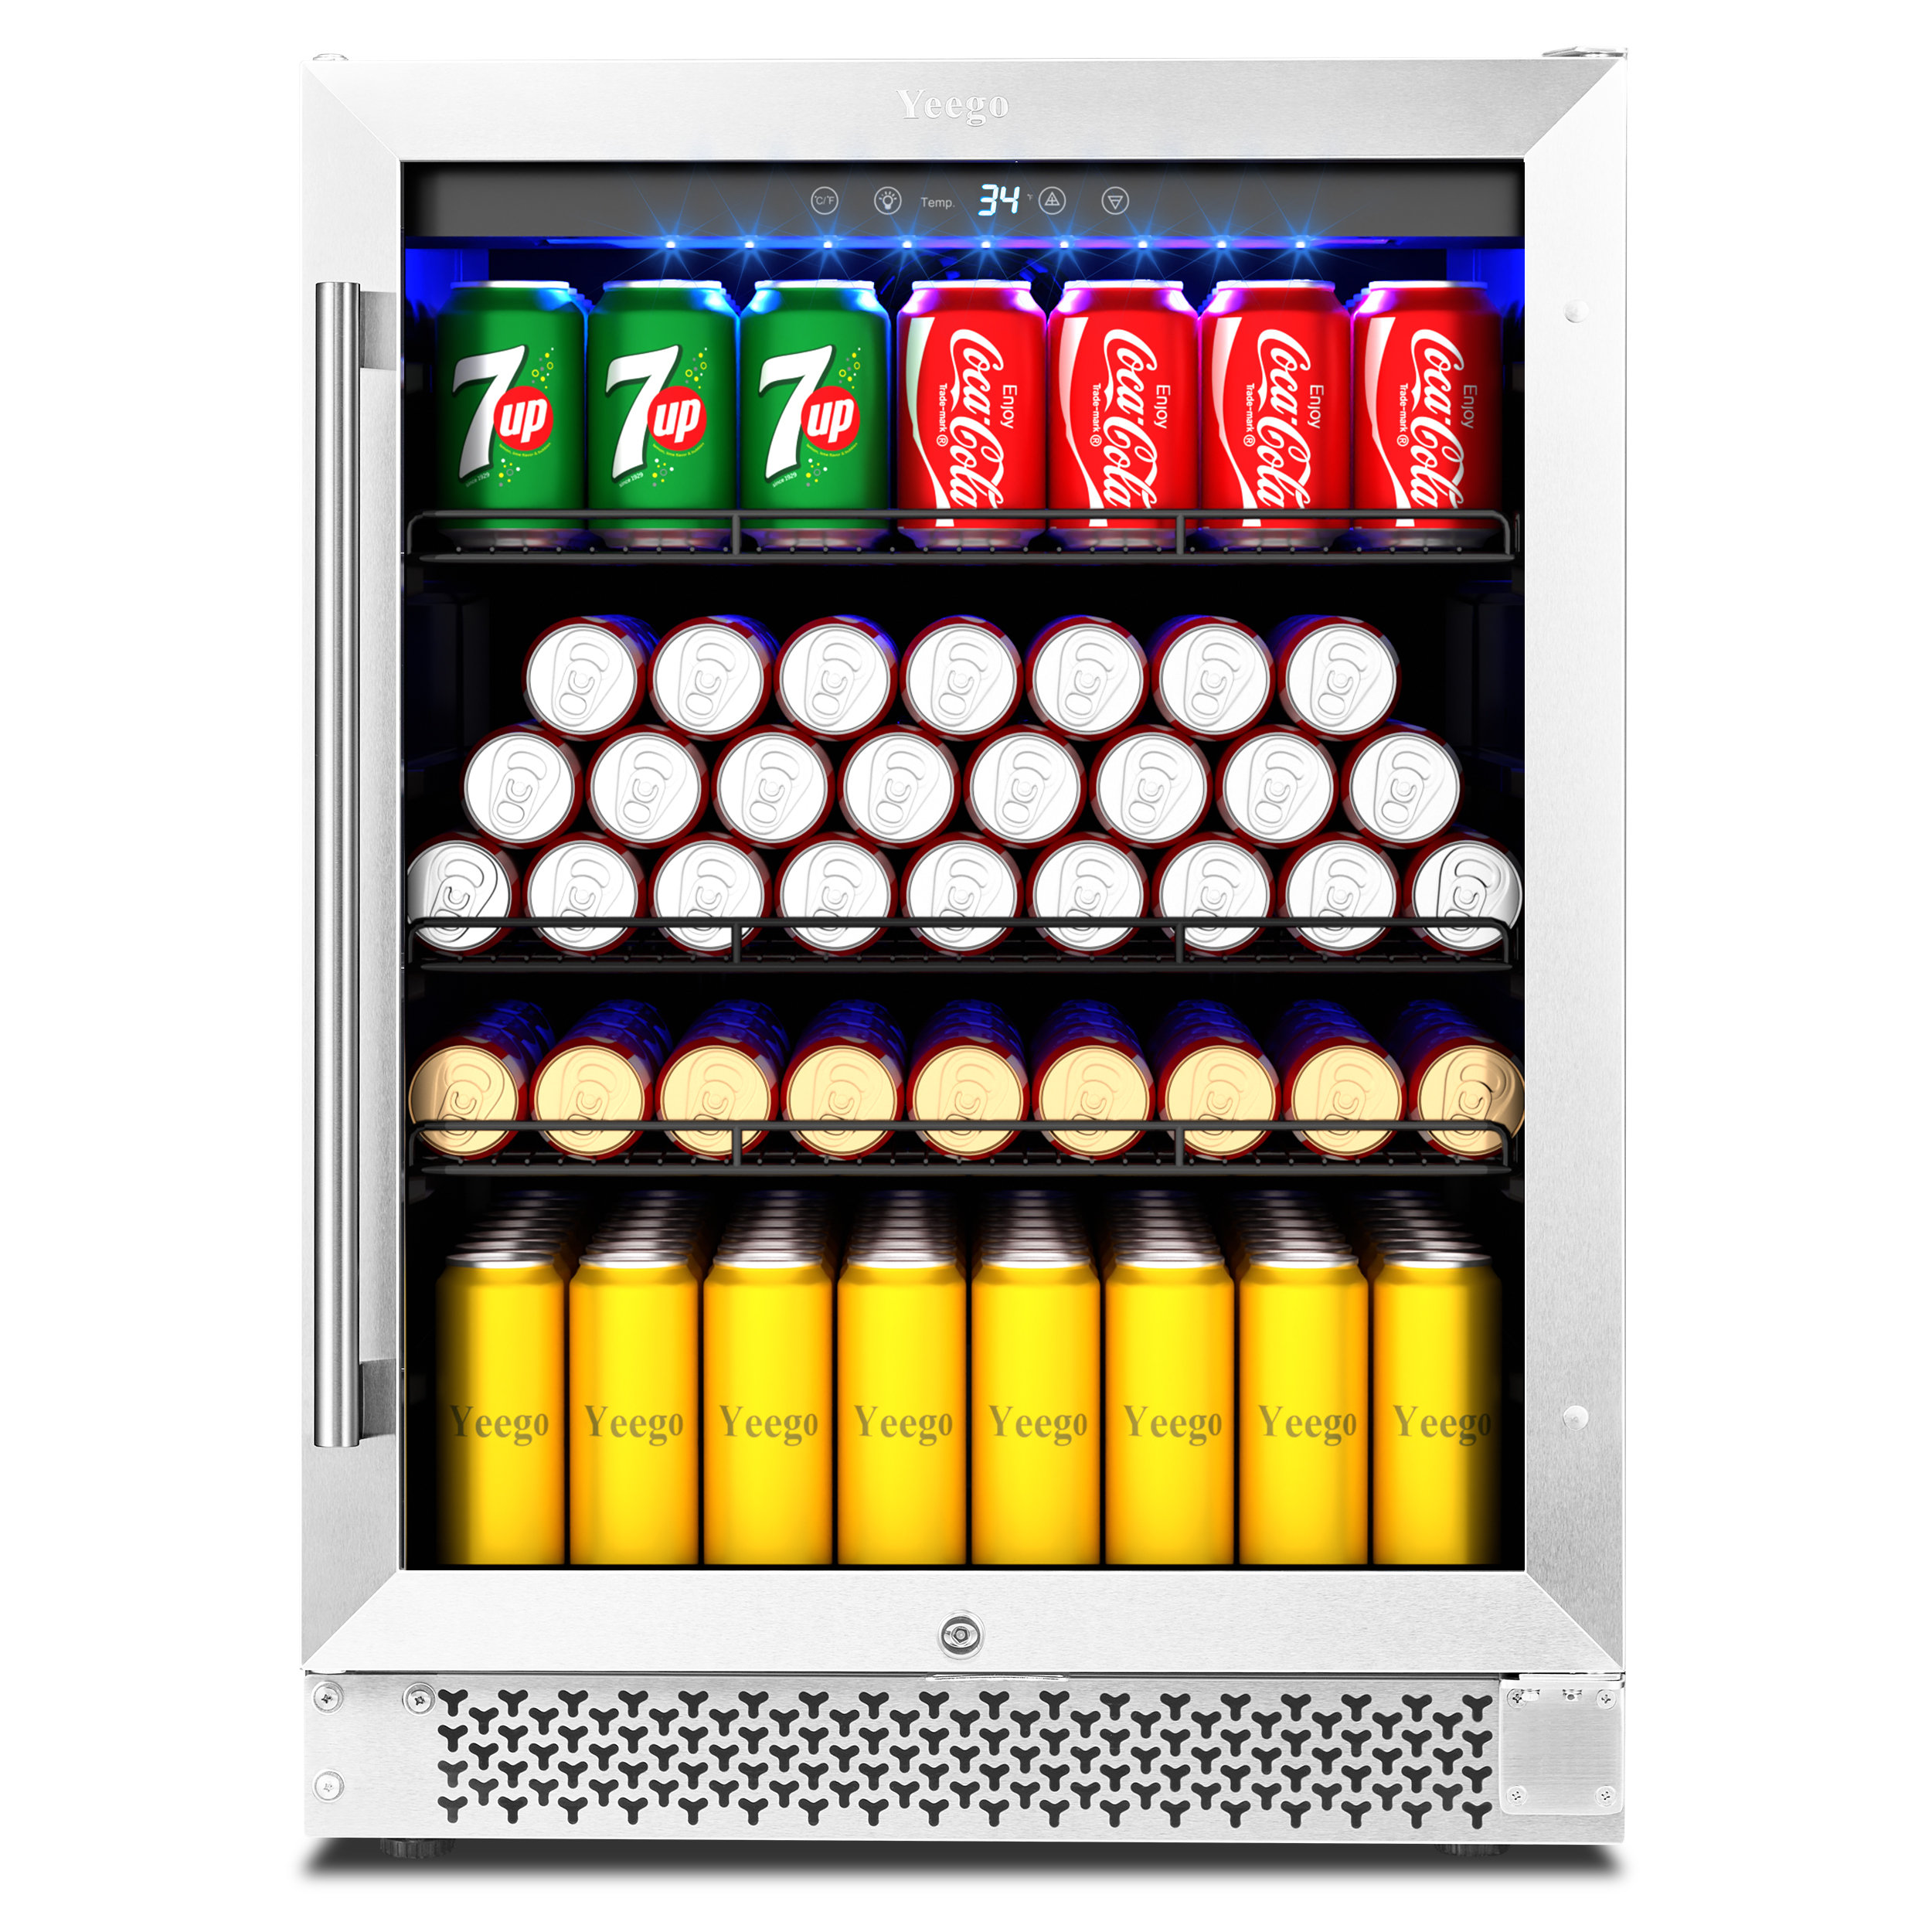  COWSAR Beverage Refrigerator Mini Fridge 60 Can Beer